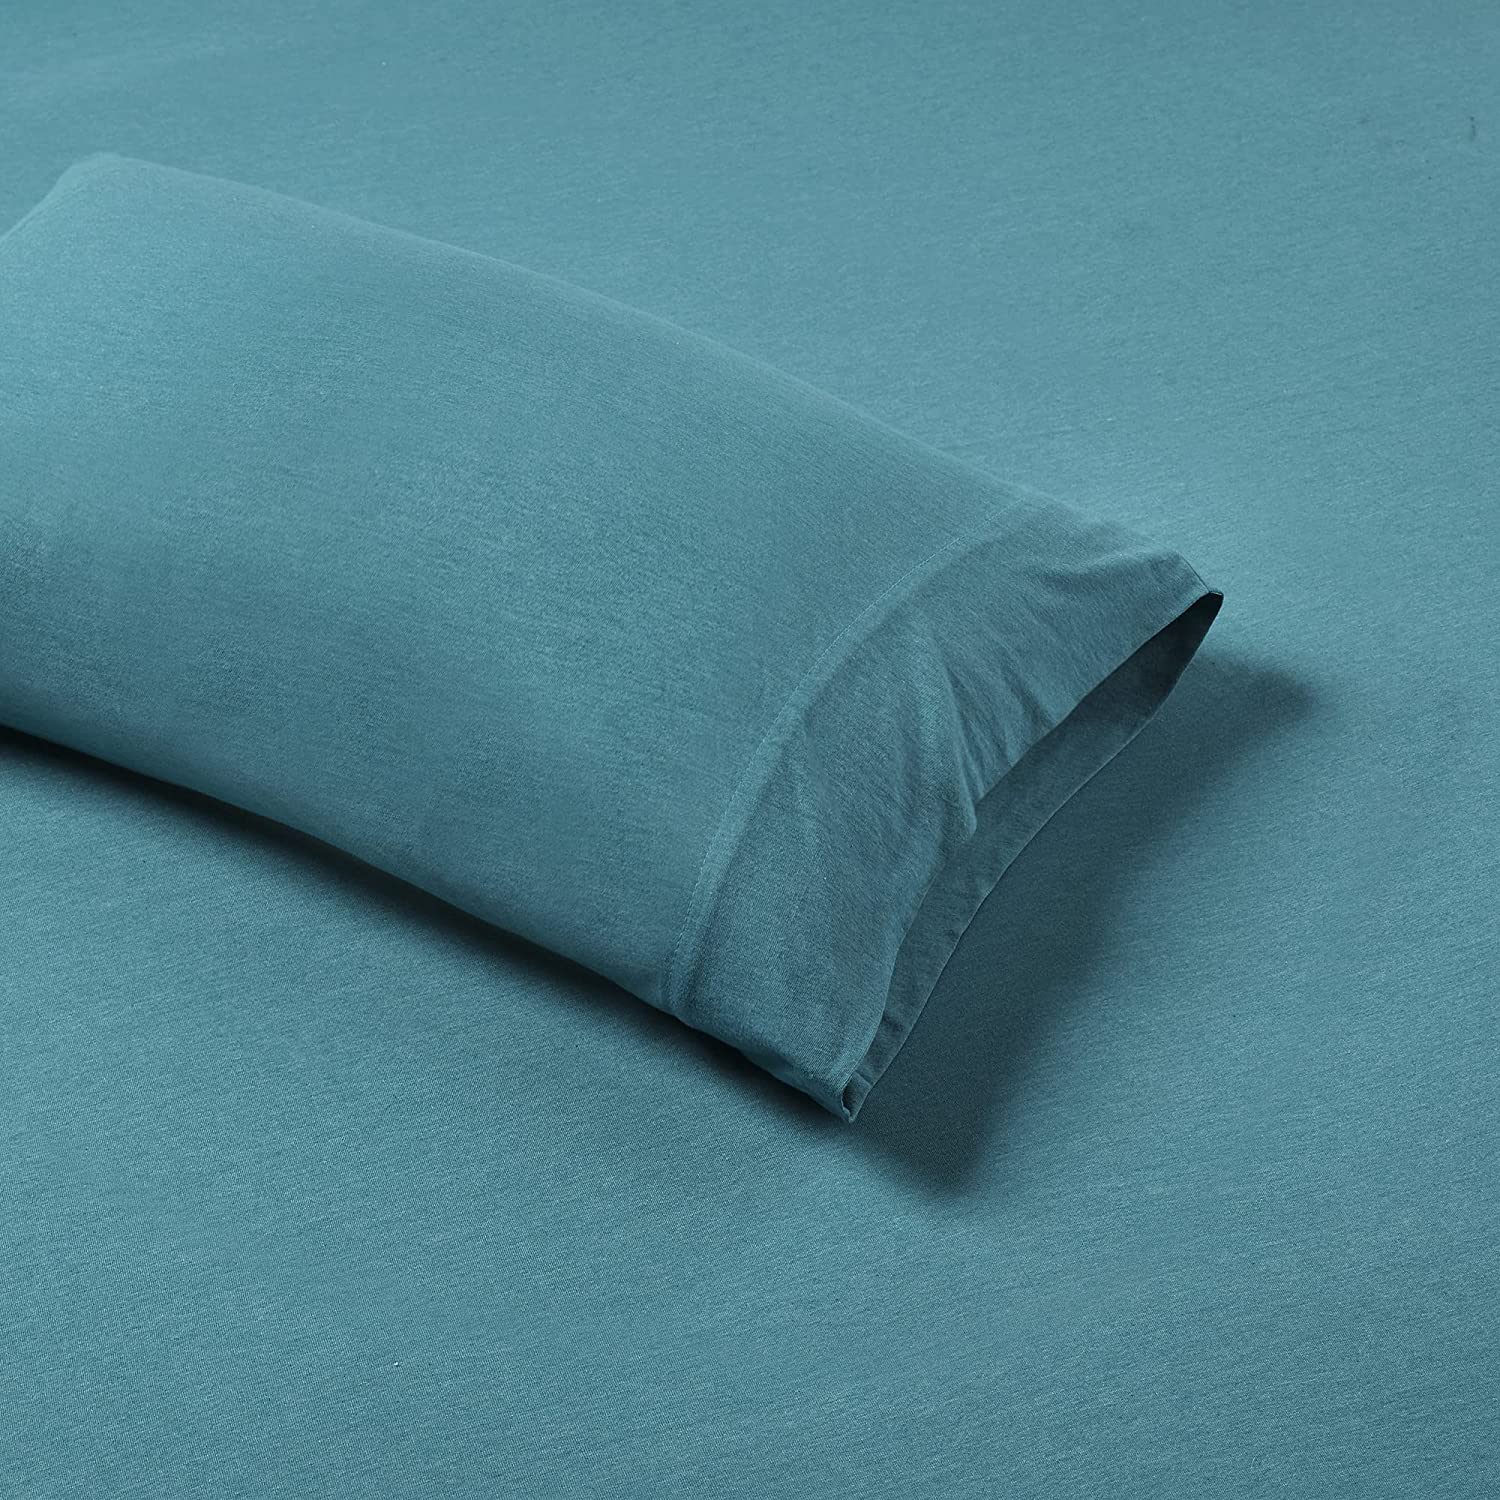 Cotton Blend Jersey Knit Twin Bed Sheets , Coastal Cotton Bed Sheet , Teal Bed Sheet Set 3-Piece Include Flat Sheet , Fitted Sheet & Pillowcase